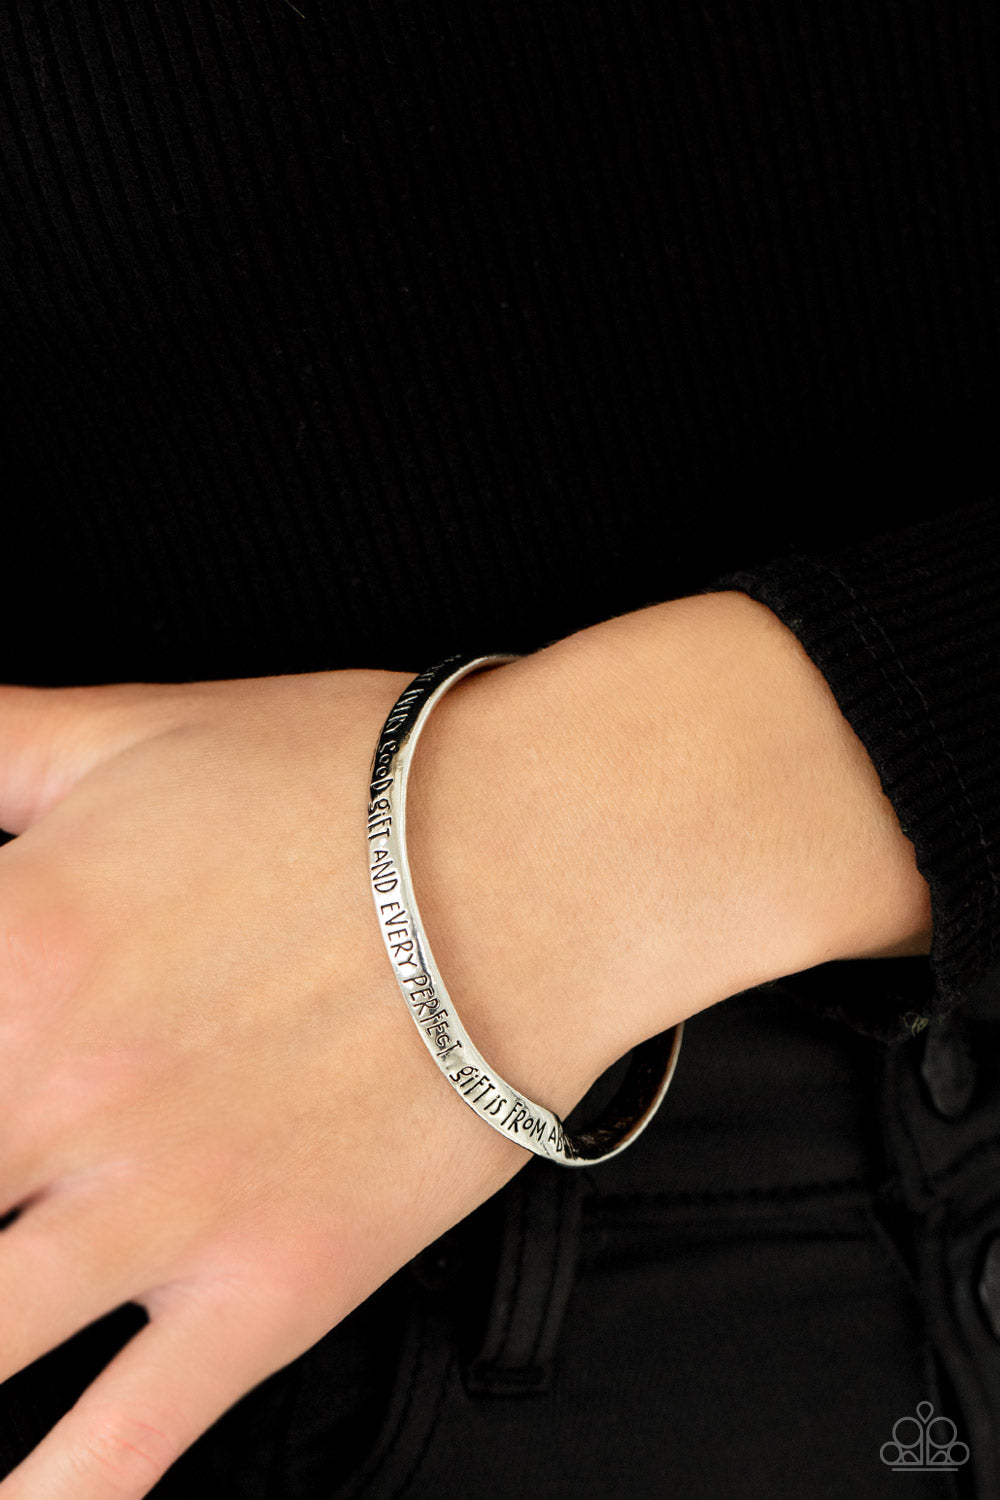 Perfect Present - silver - Paparazzi bracelet